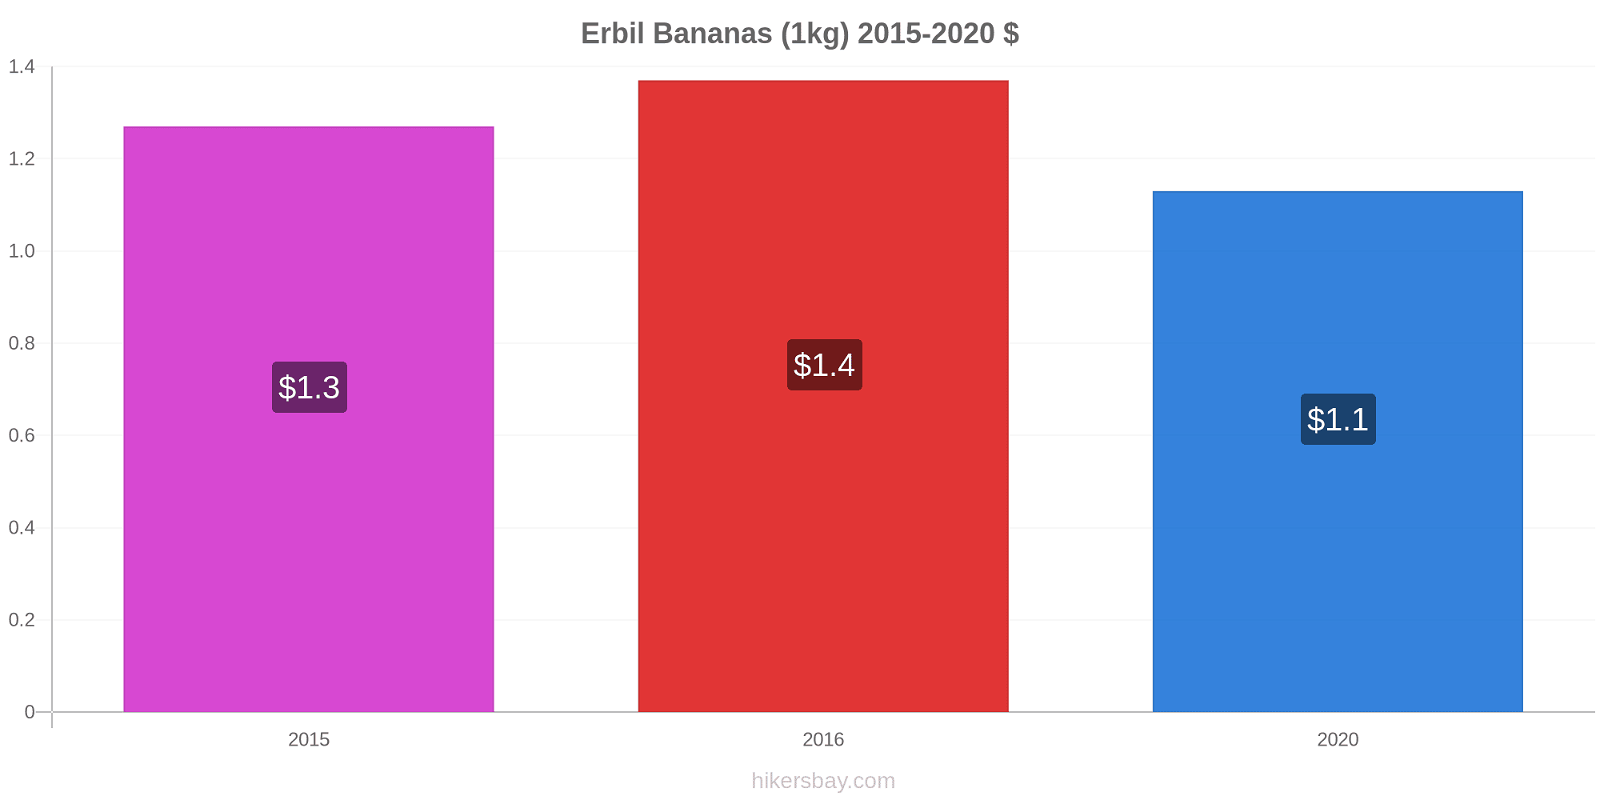 Erbil price changes Bananas (1kg) hikersbay.com